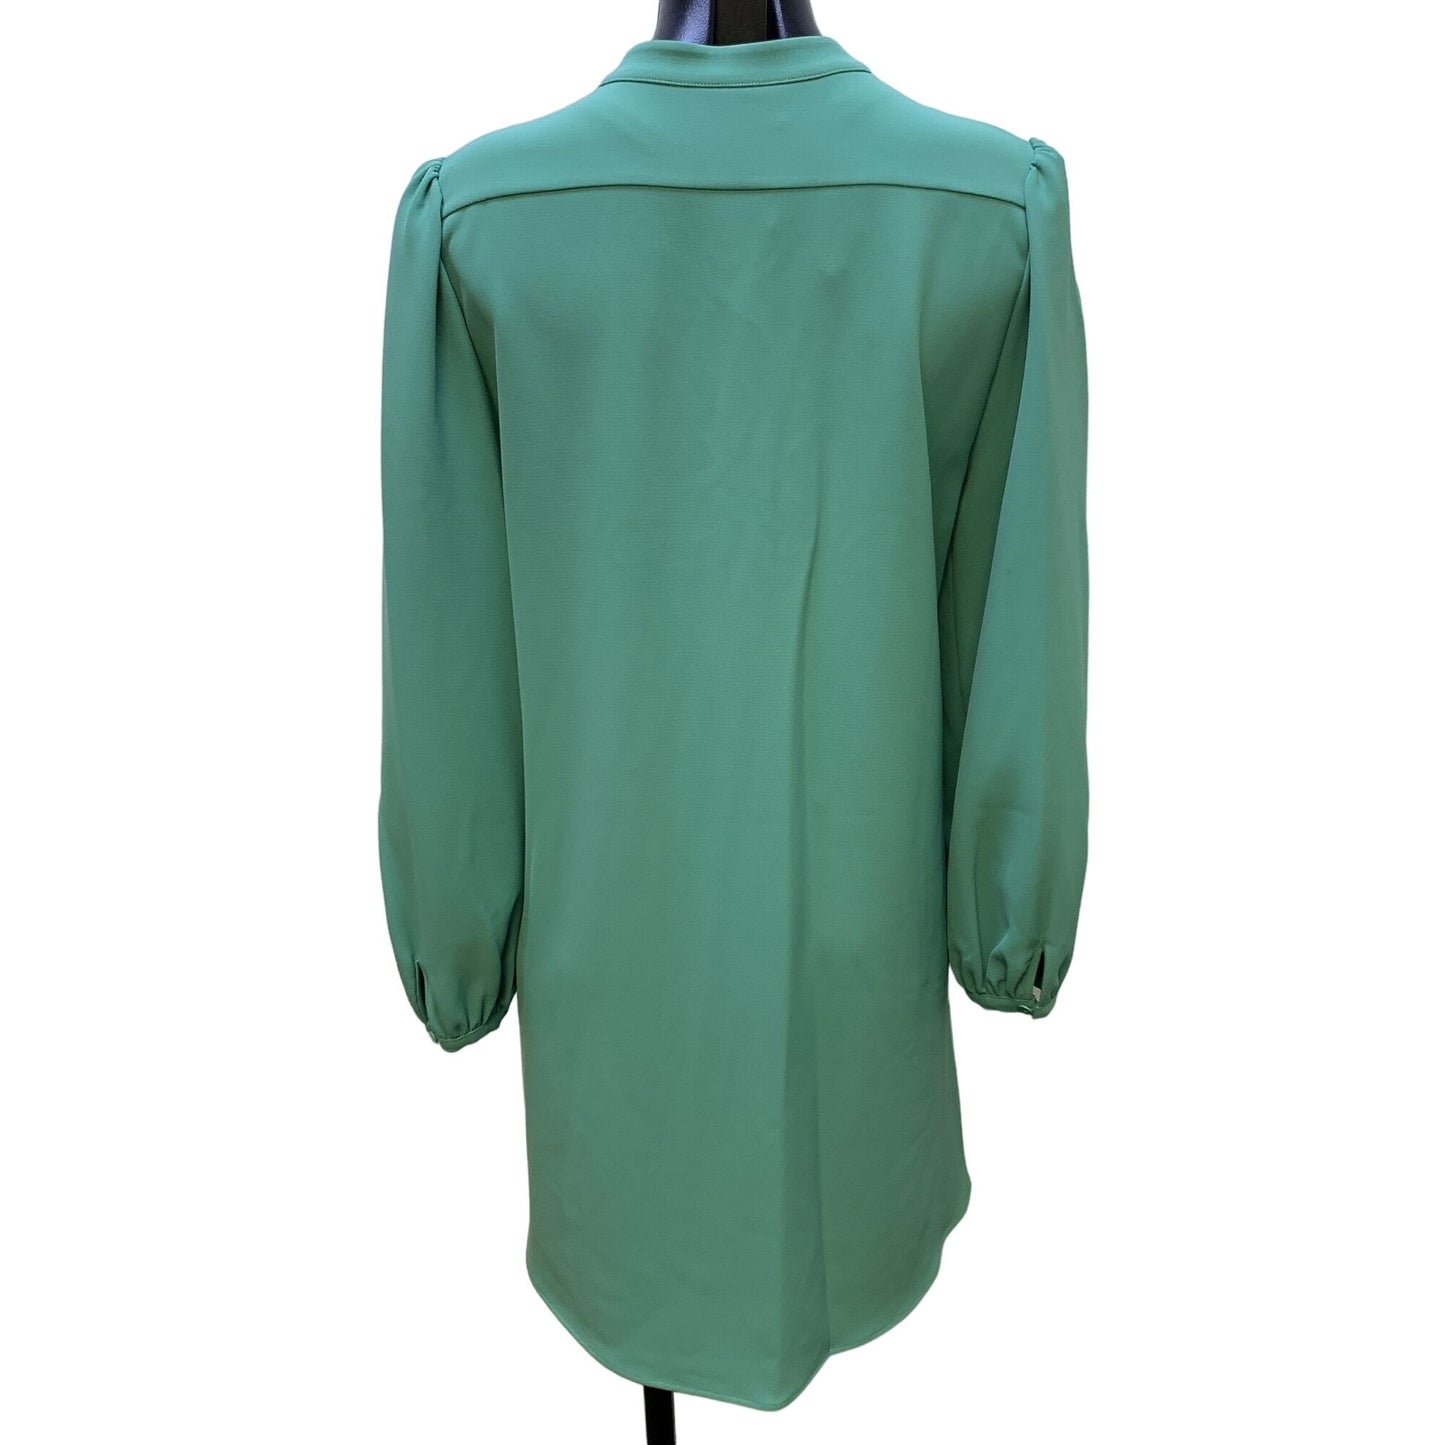 *NWT Tara Jarmon Paris Green Lace-up Neck Tunic Dress Medium